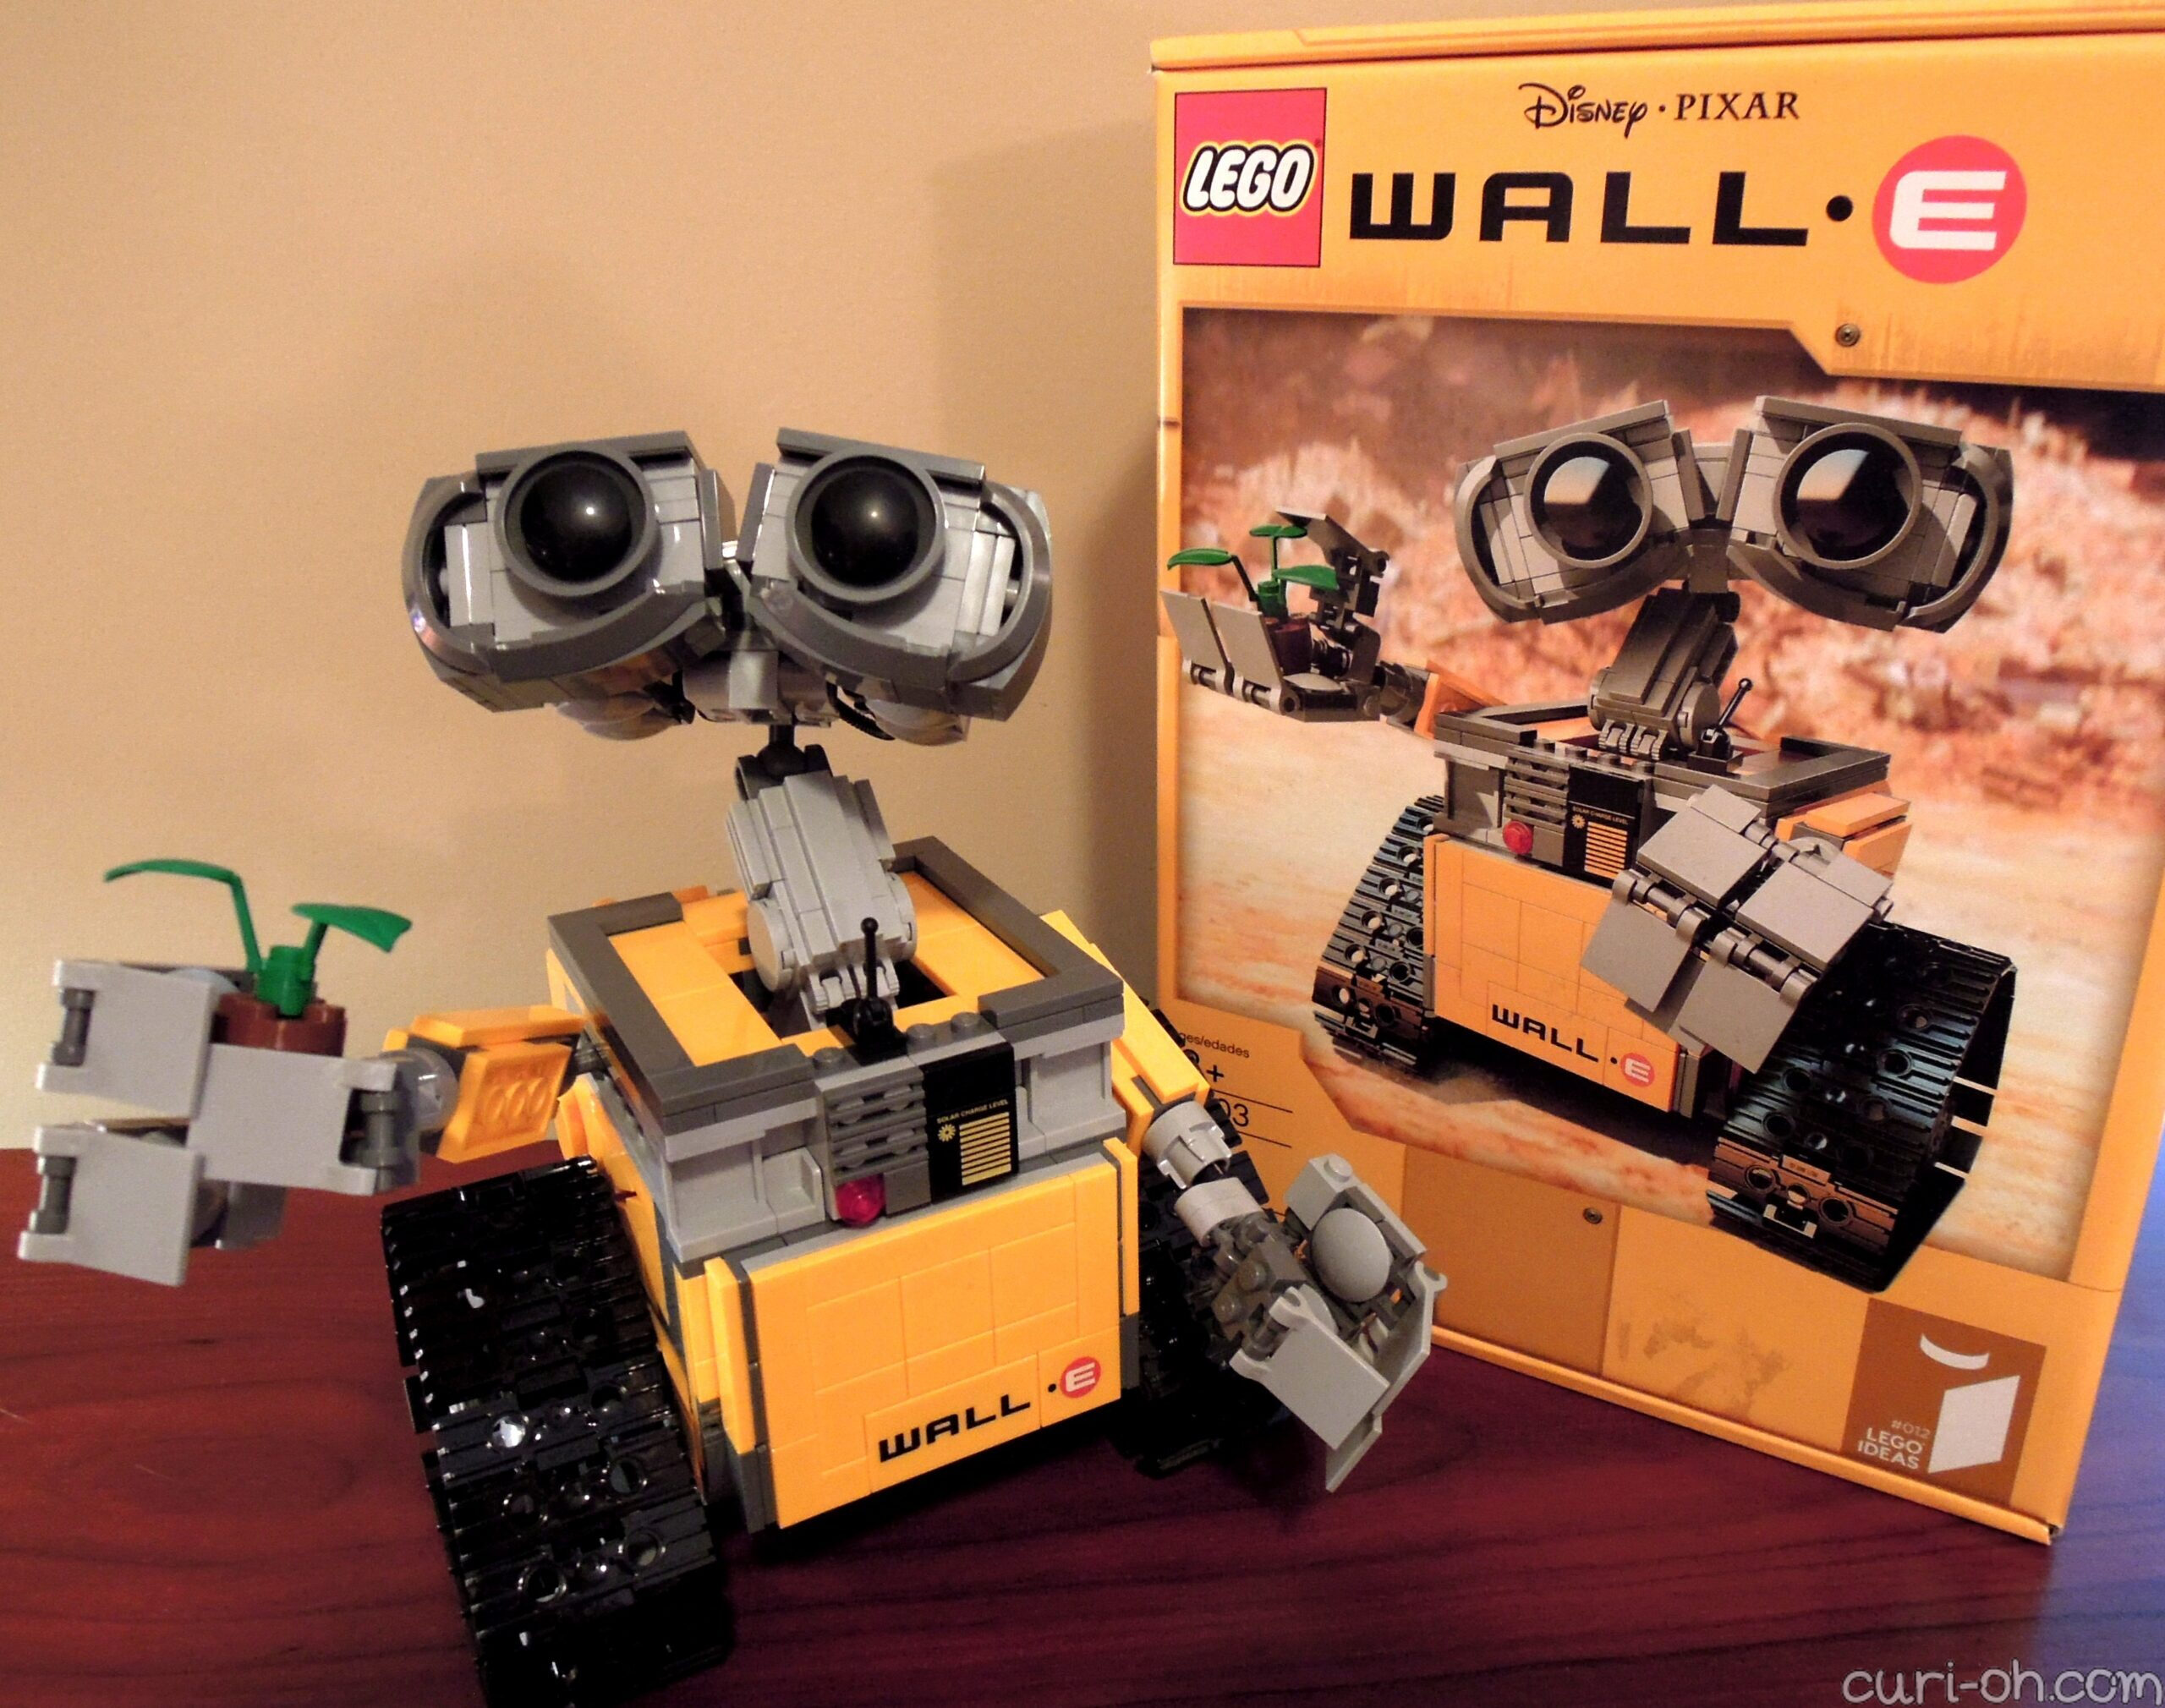 Lego wall e